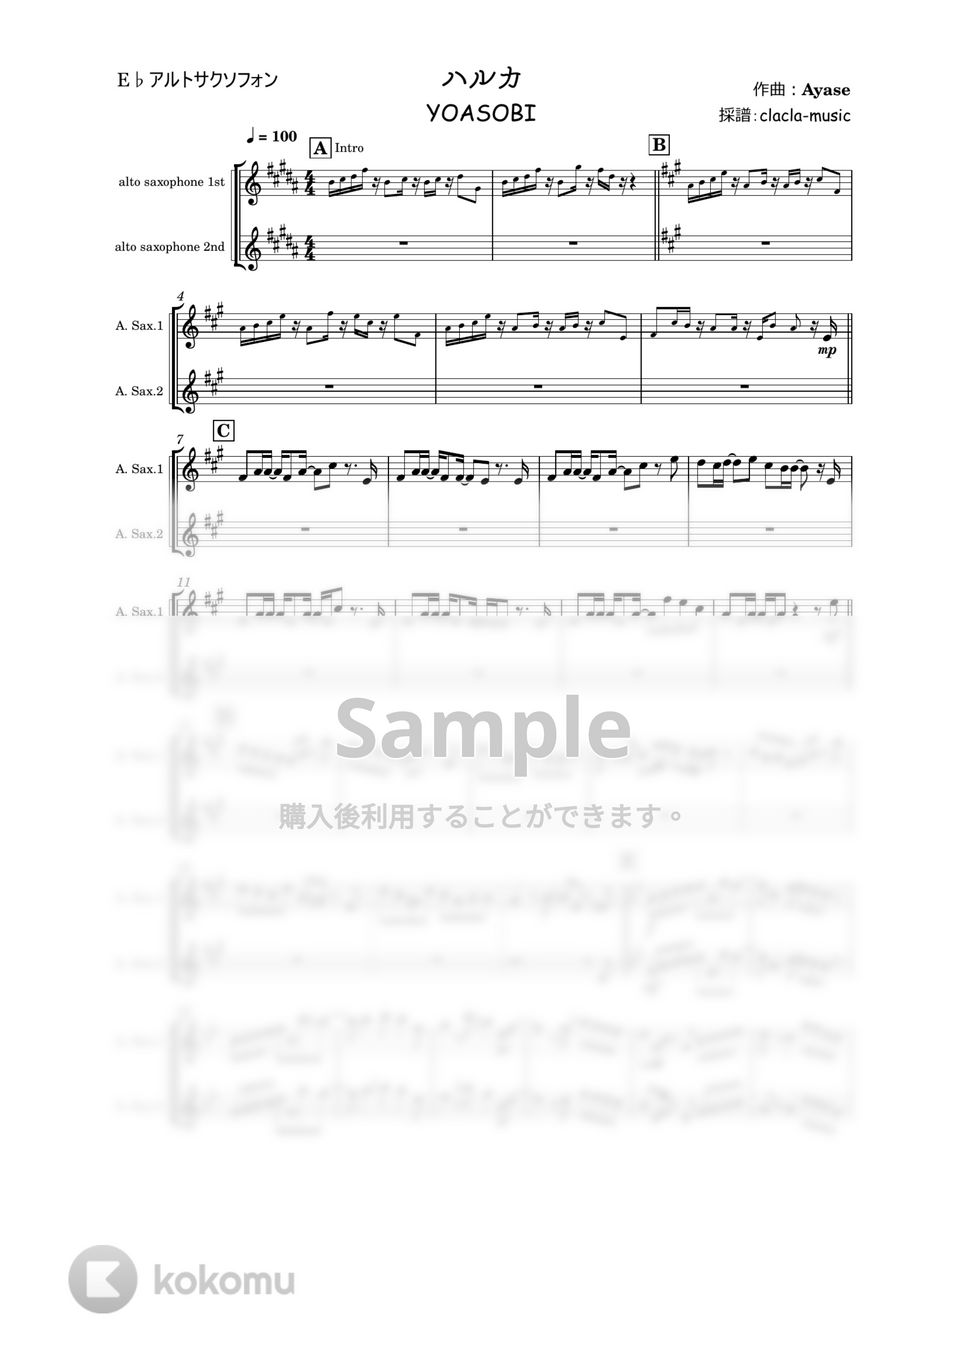 YOASOBI - ハルカ (アルトサクソフォン、ハモリパート付き) by clacla-music